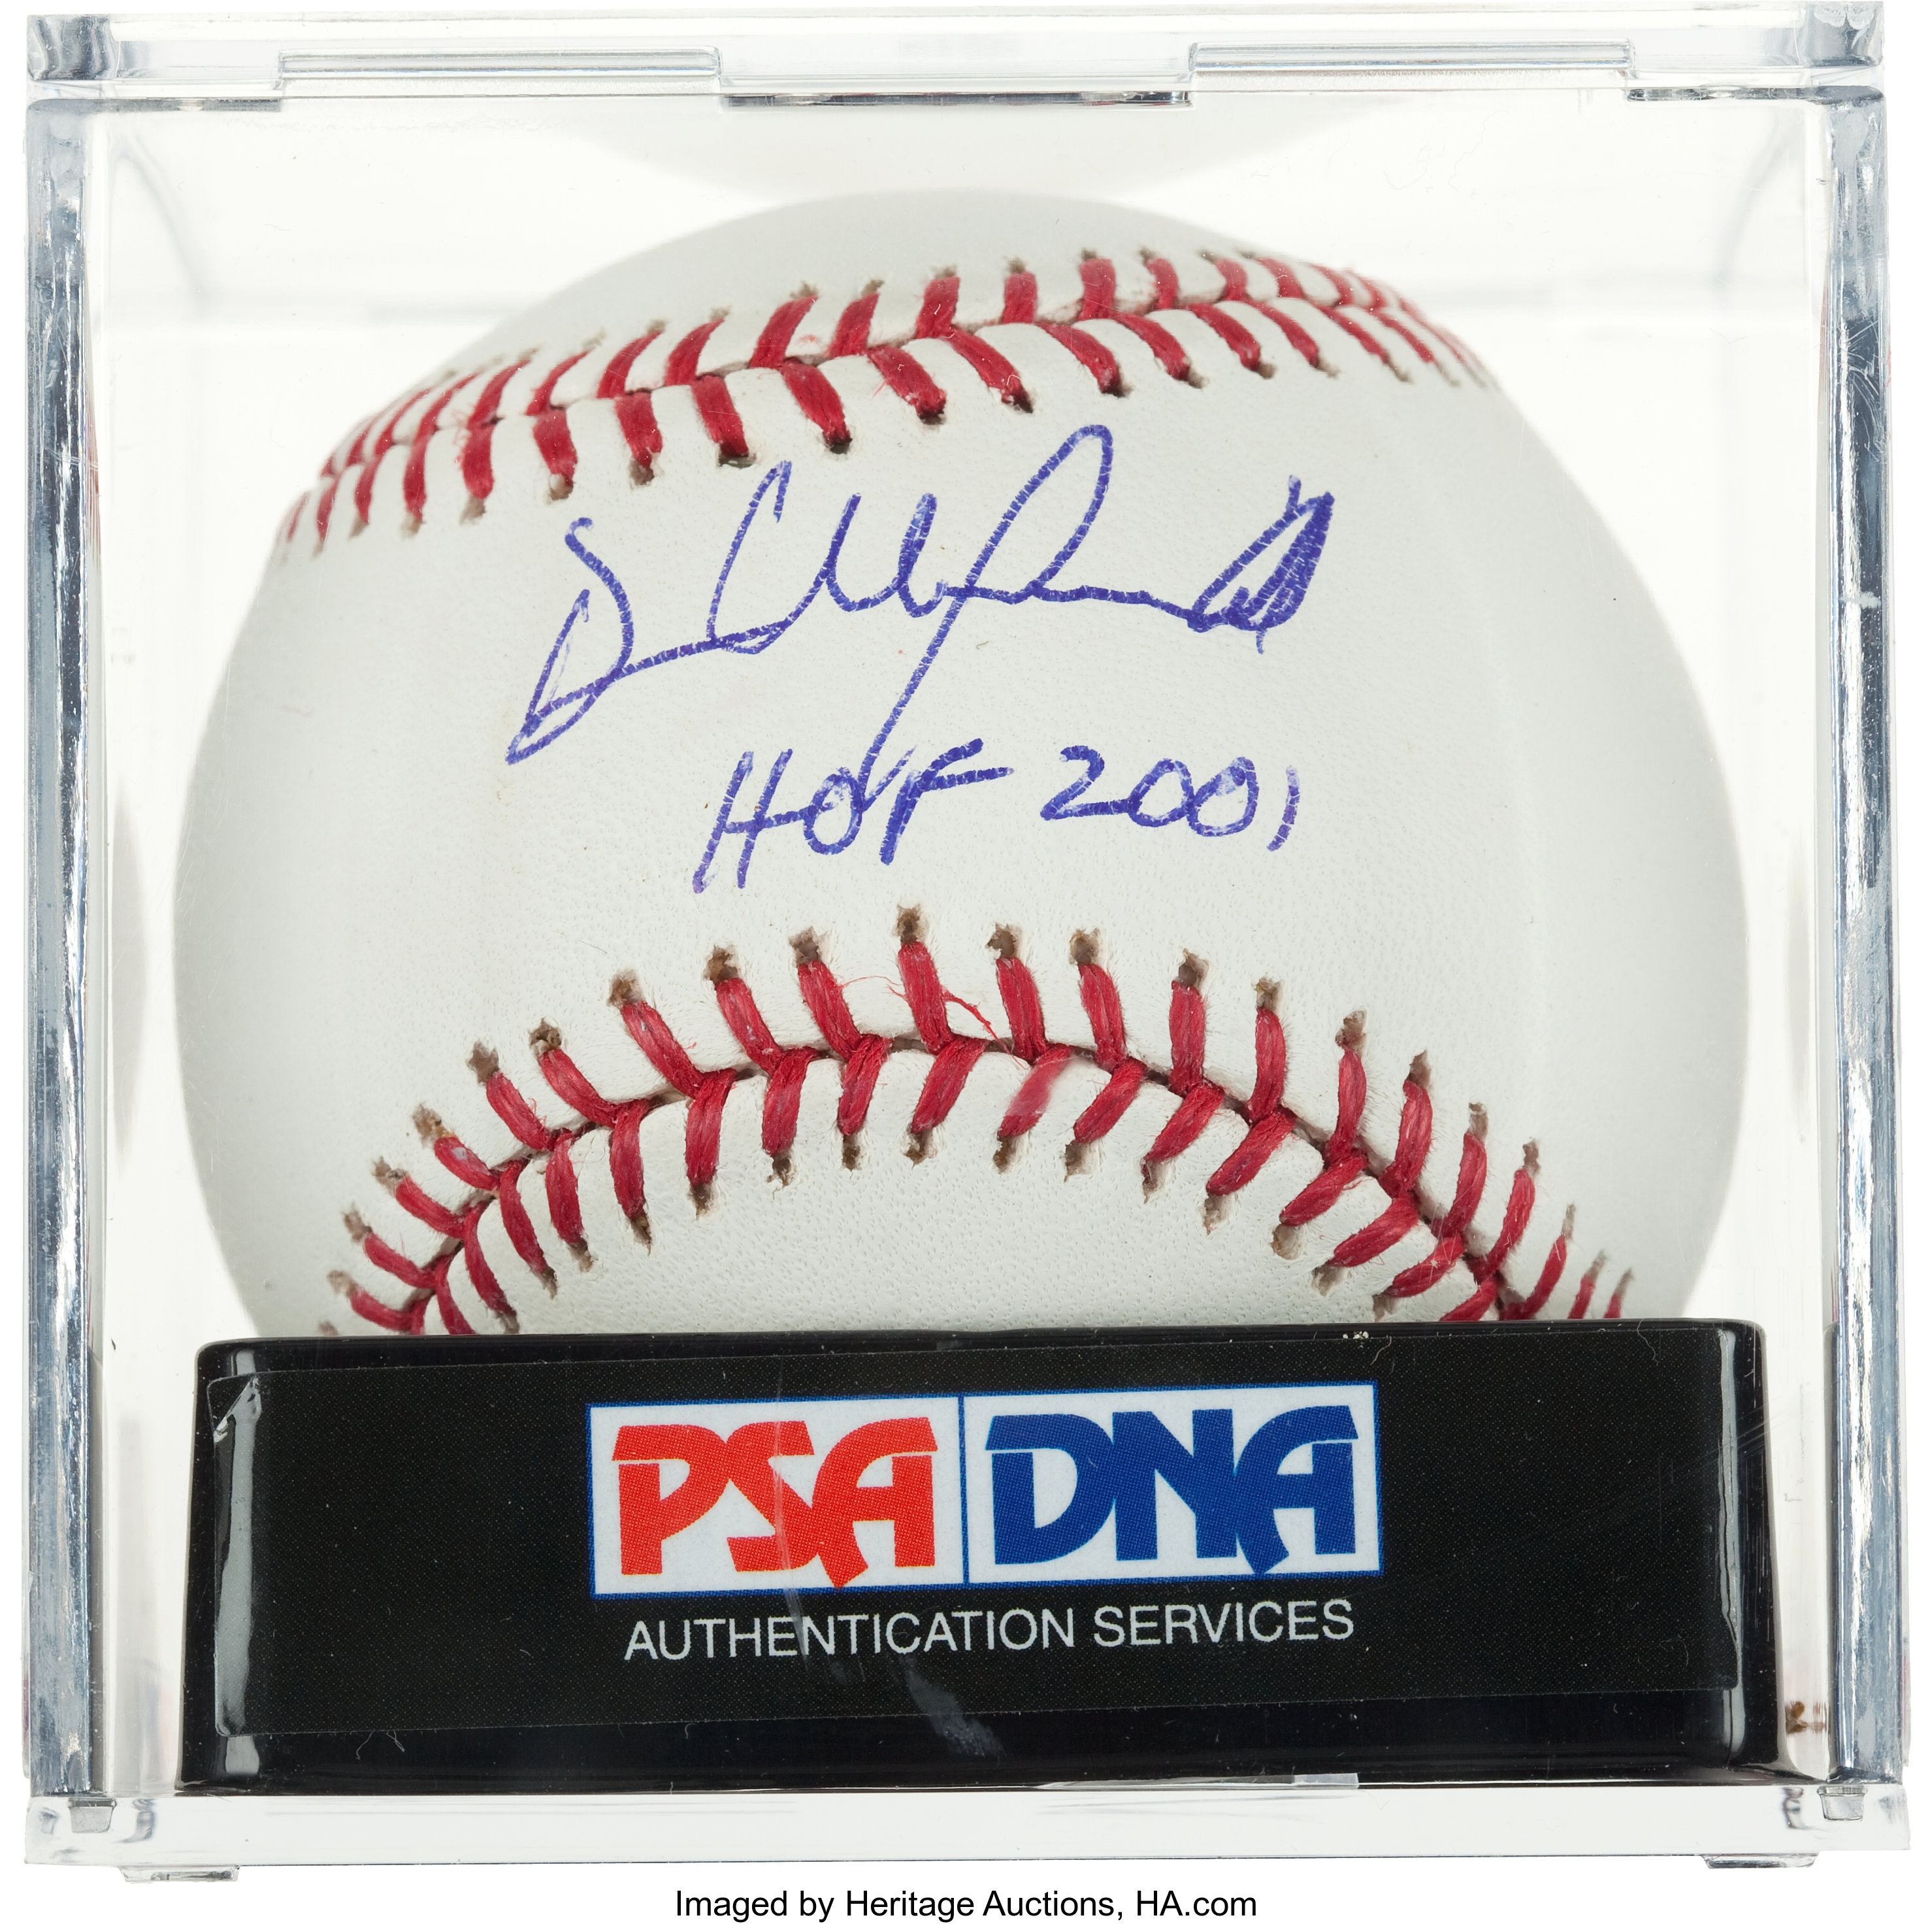 Dave Winfield signed baseball